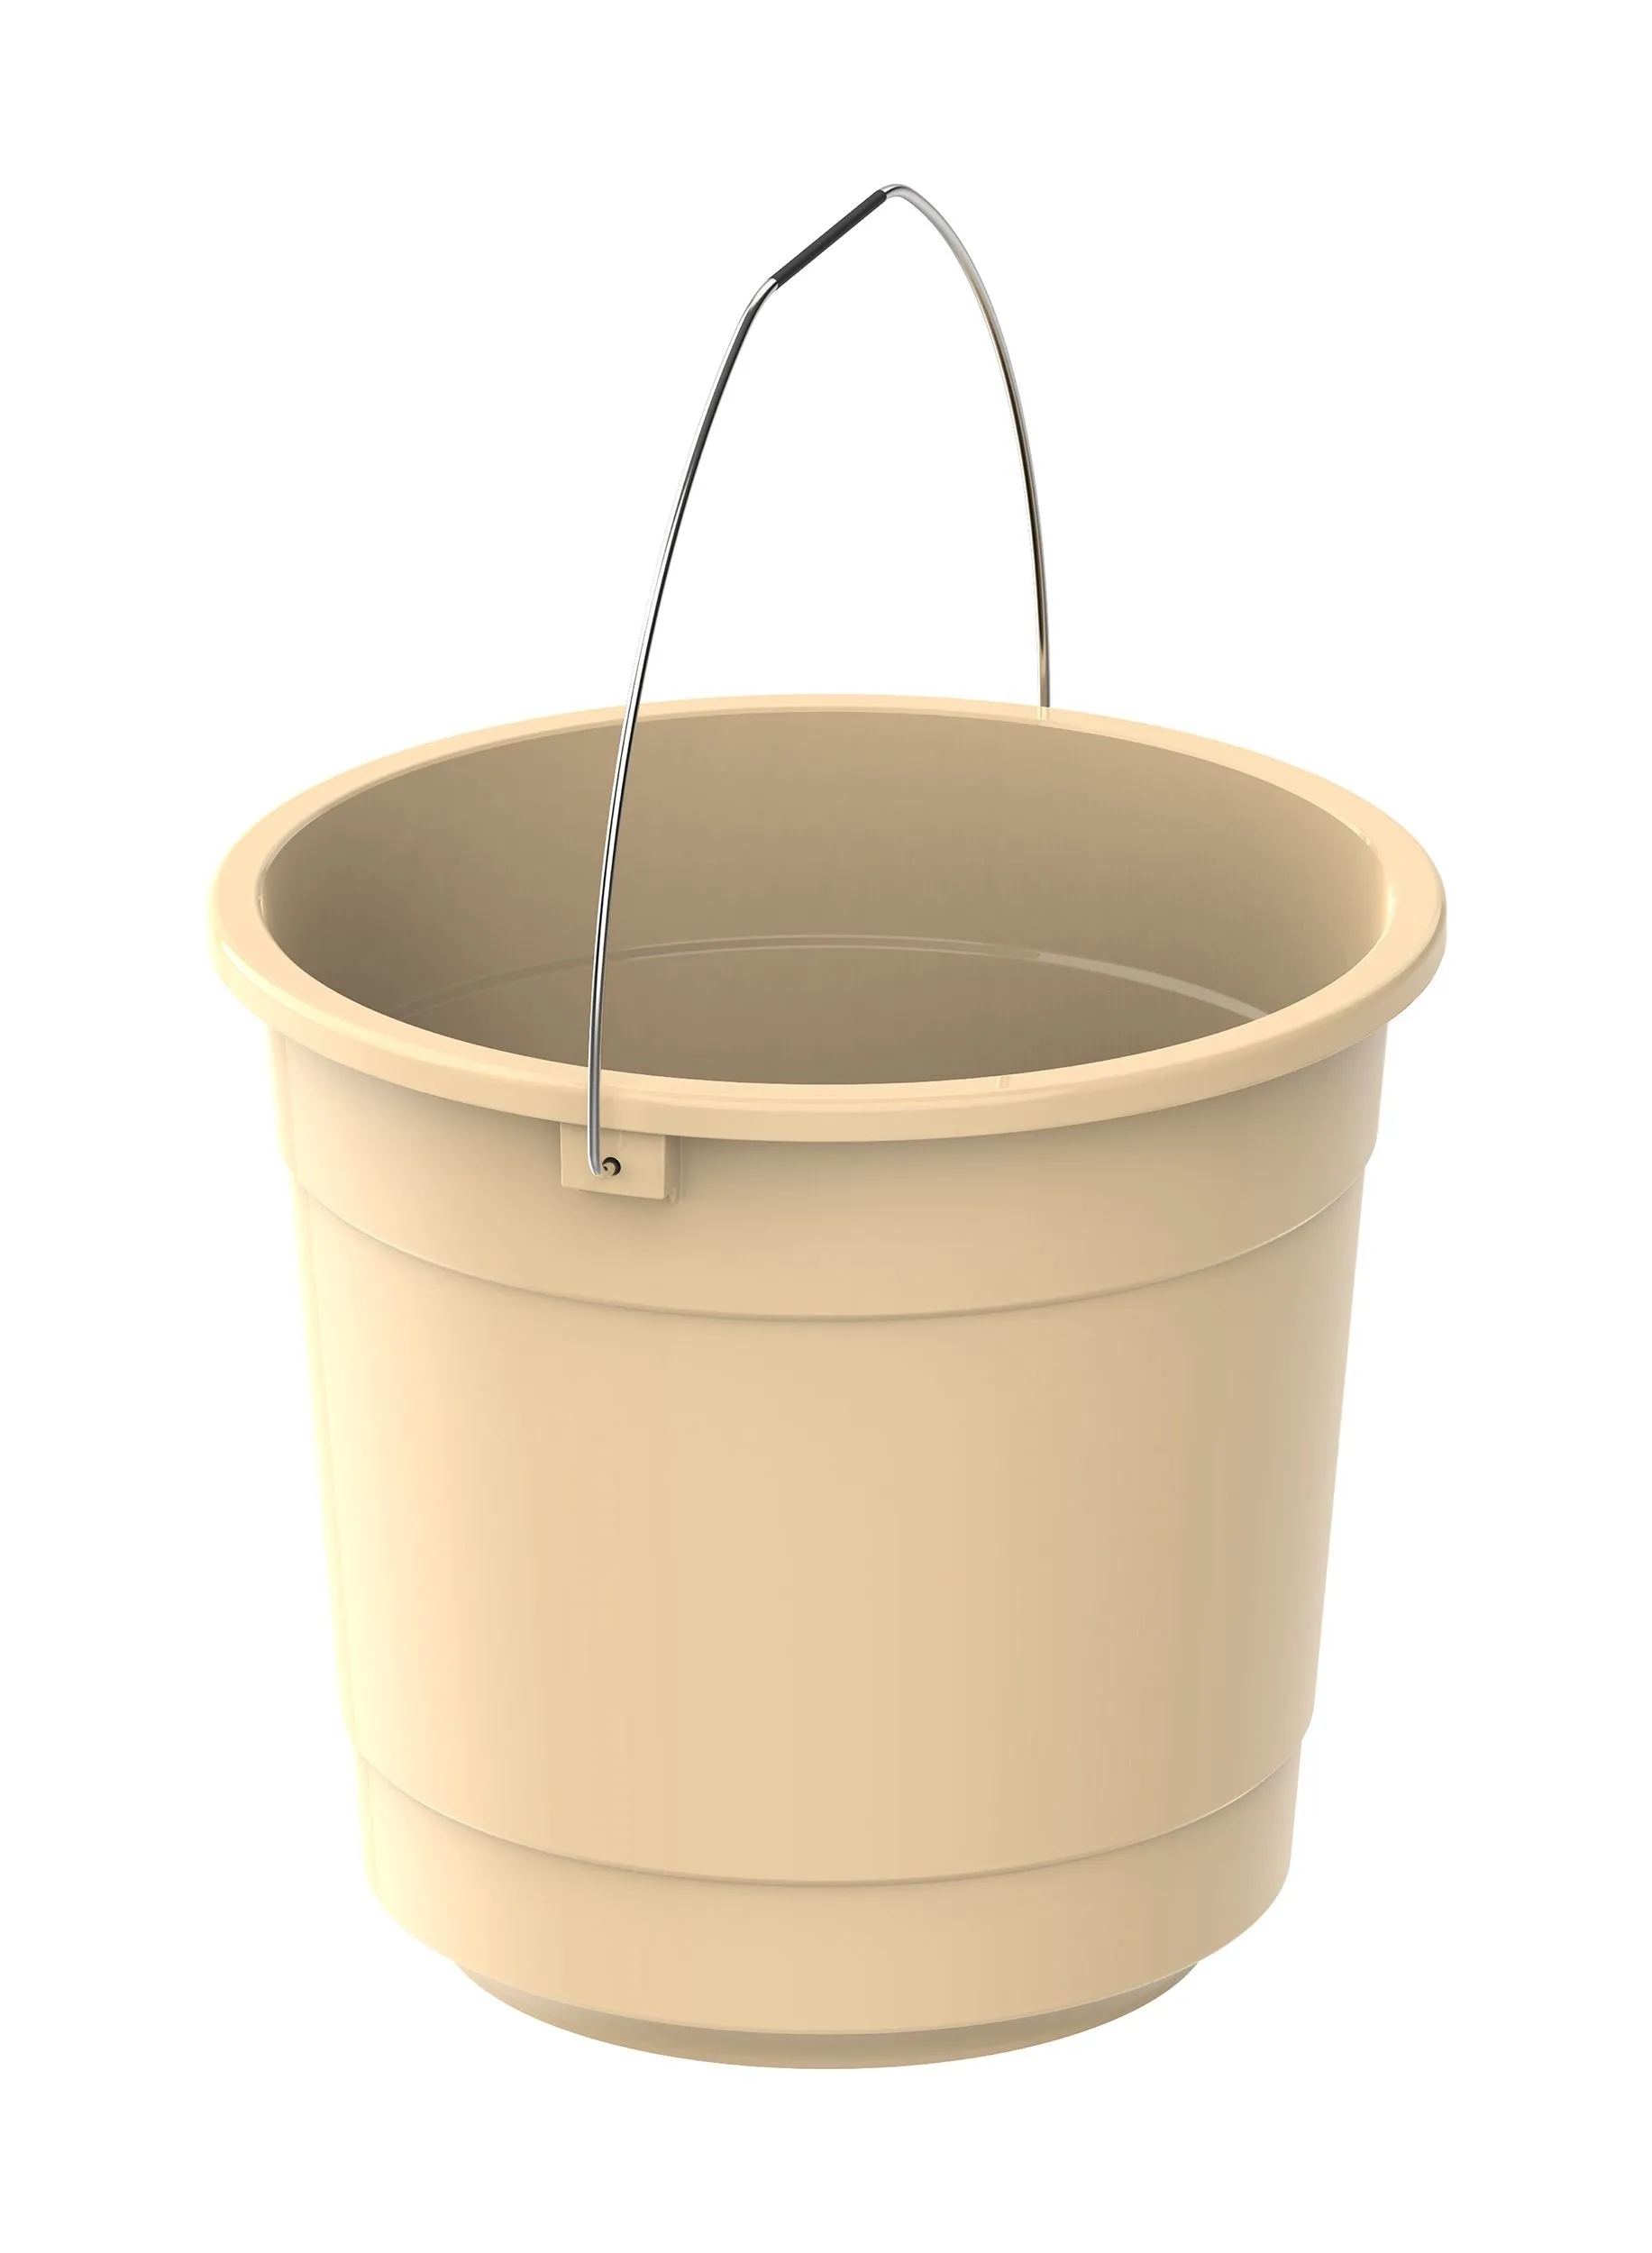 Cosmoplast EX 3L Round Plastic Bucket with Steel Handle